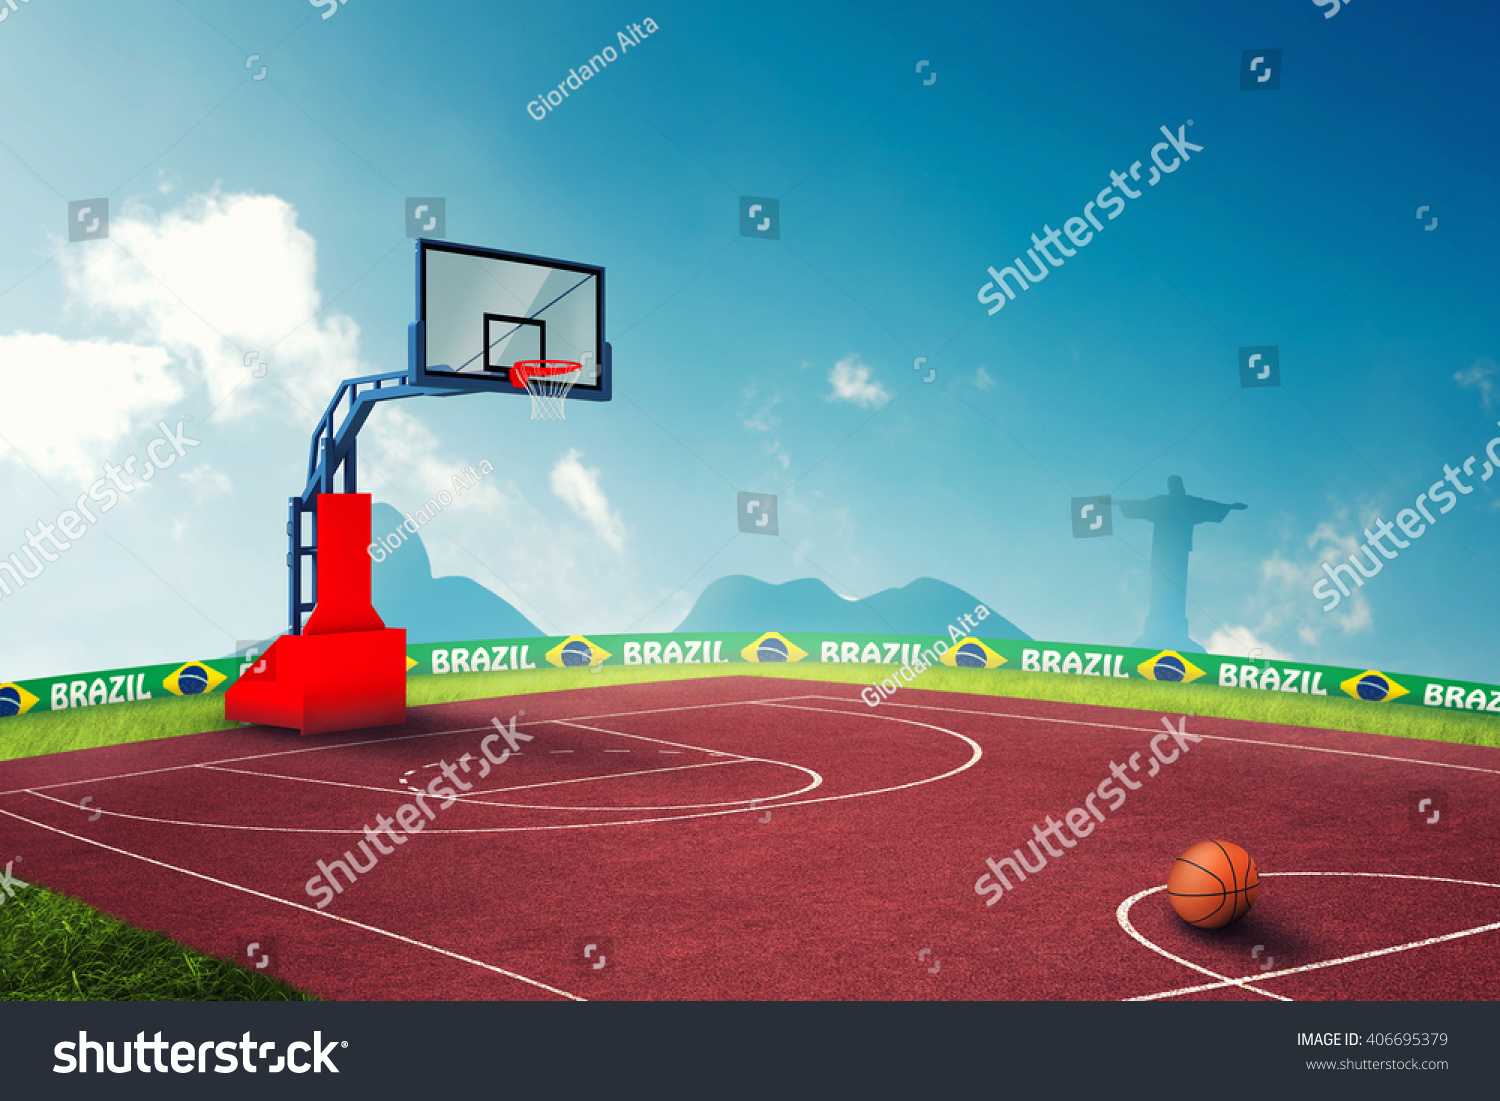 Edit Vectors Free Online - Basketball court | Shutterstock Editor